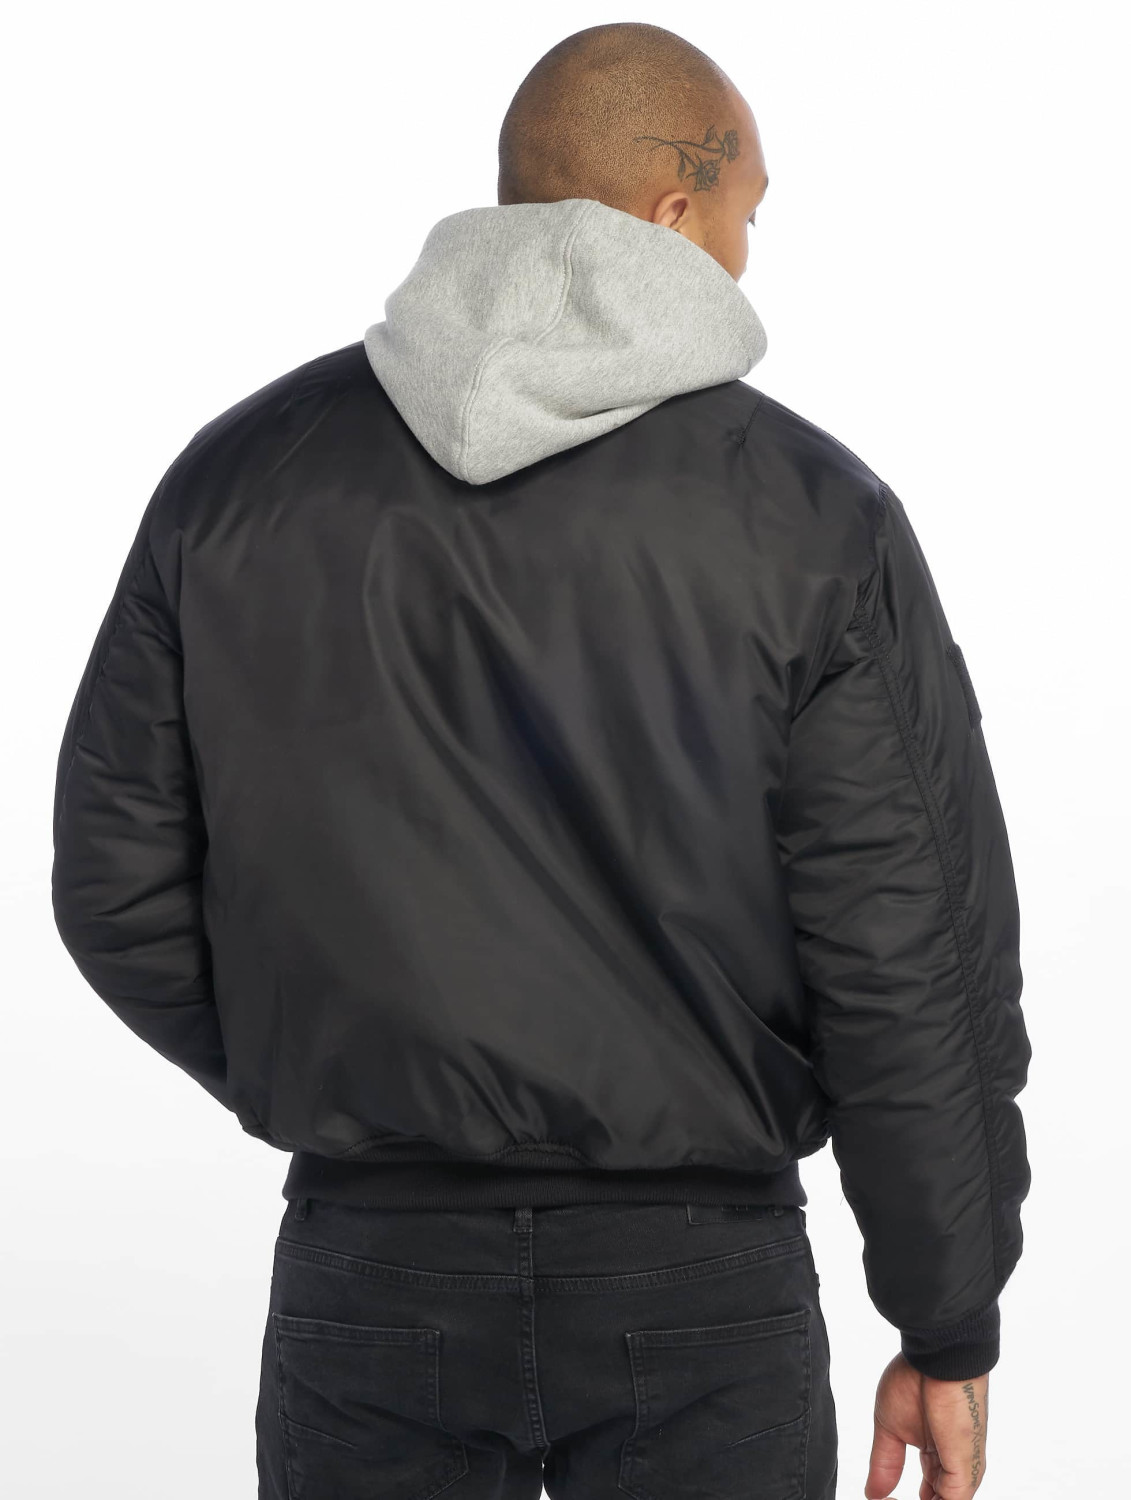 Brandit MA1 Sweat Hooded Jacket black-grey ab 51,99 € | Preisvergleich bei